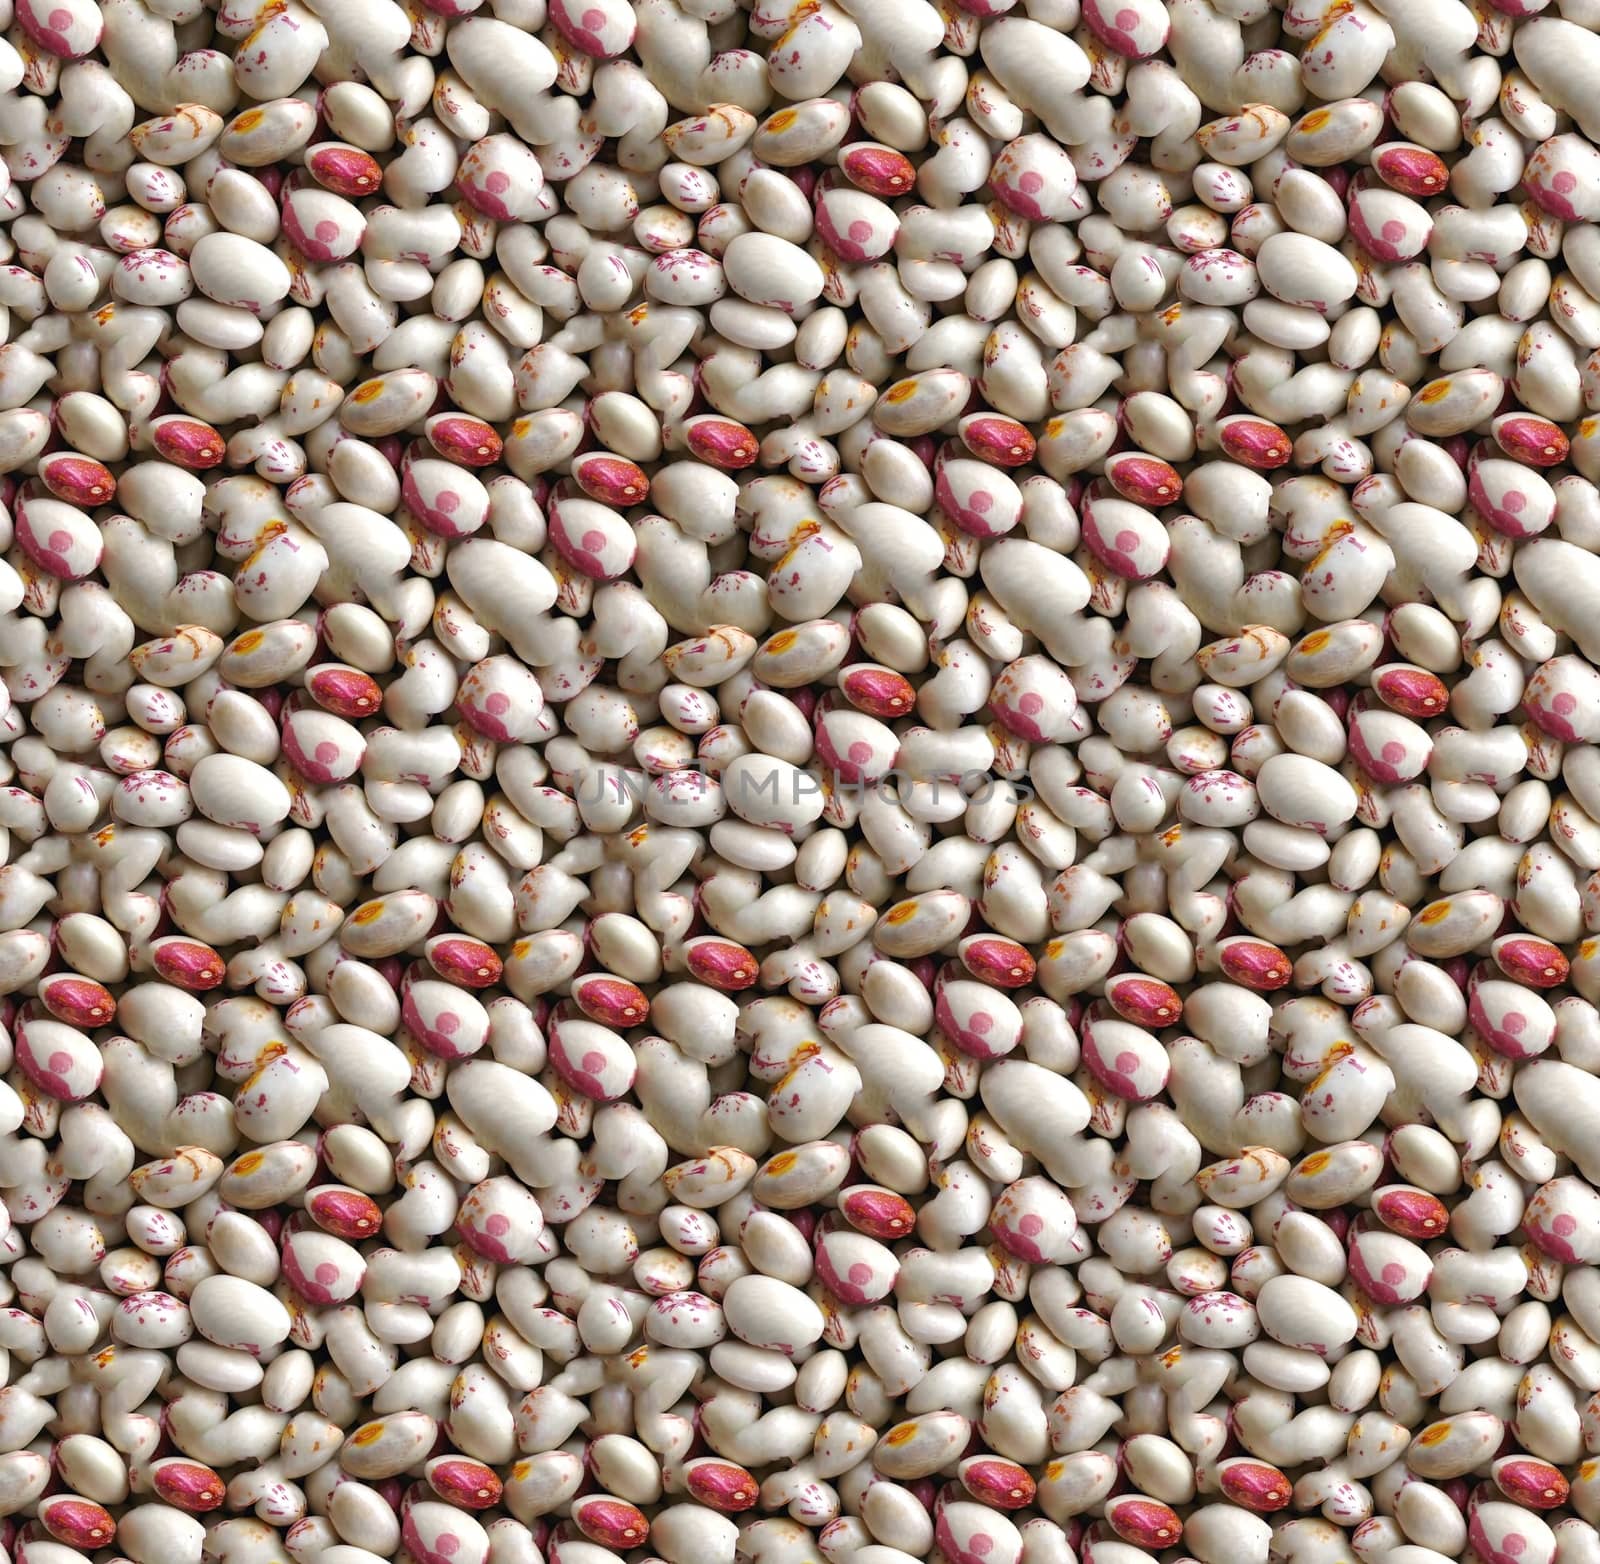 White and red Borlotti beans, a popular legume